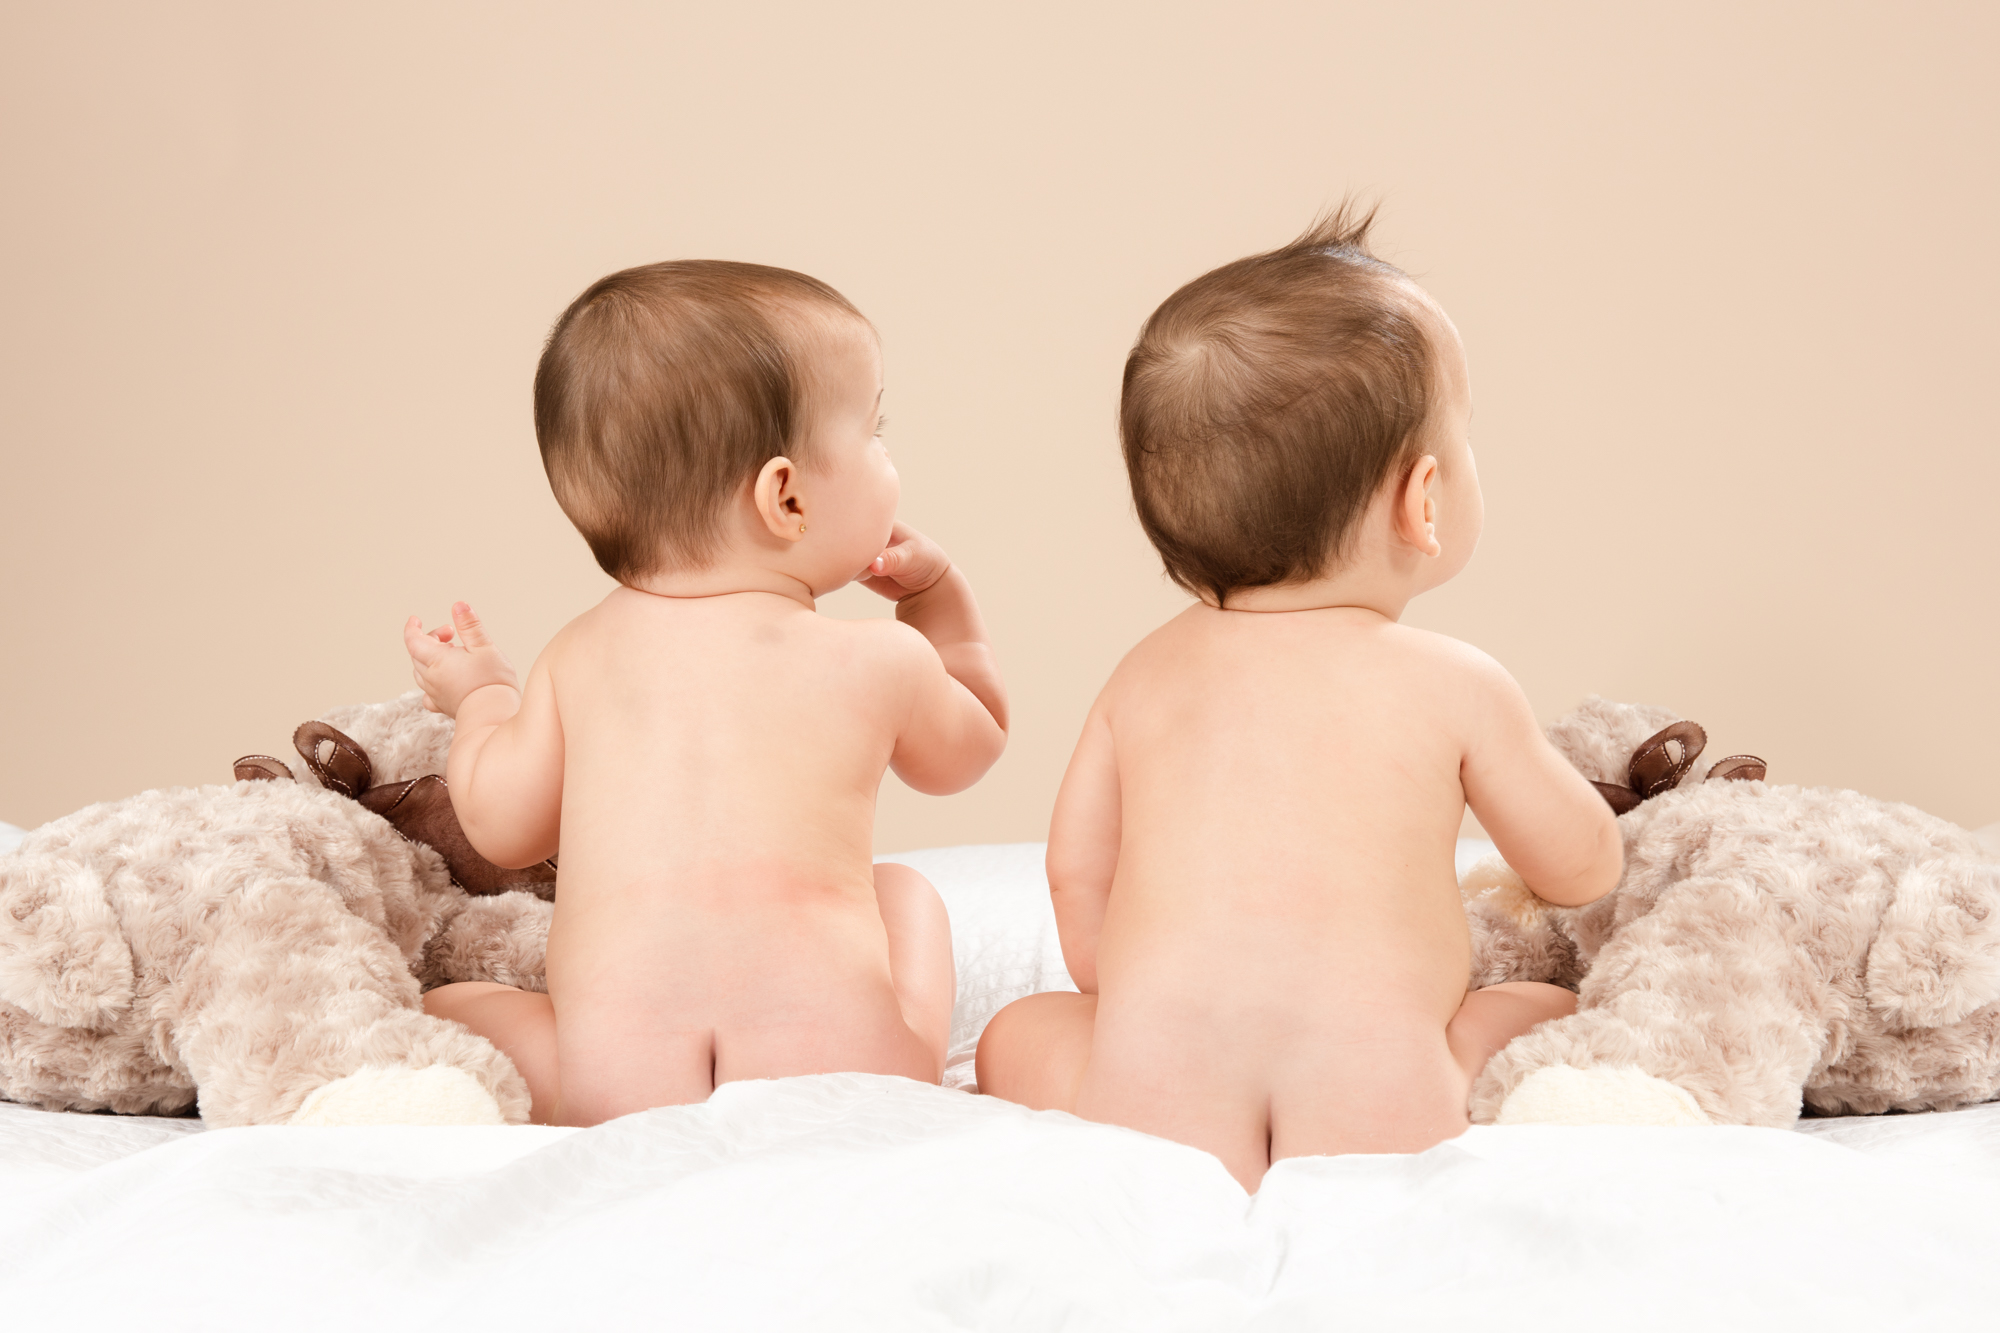 foto estudio bebes mellizos desnudos peluches